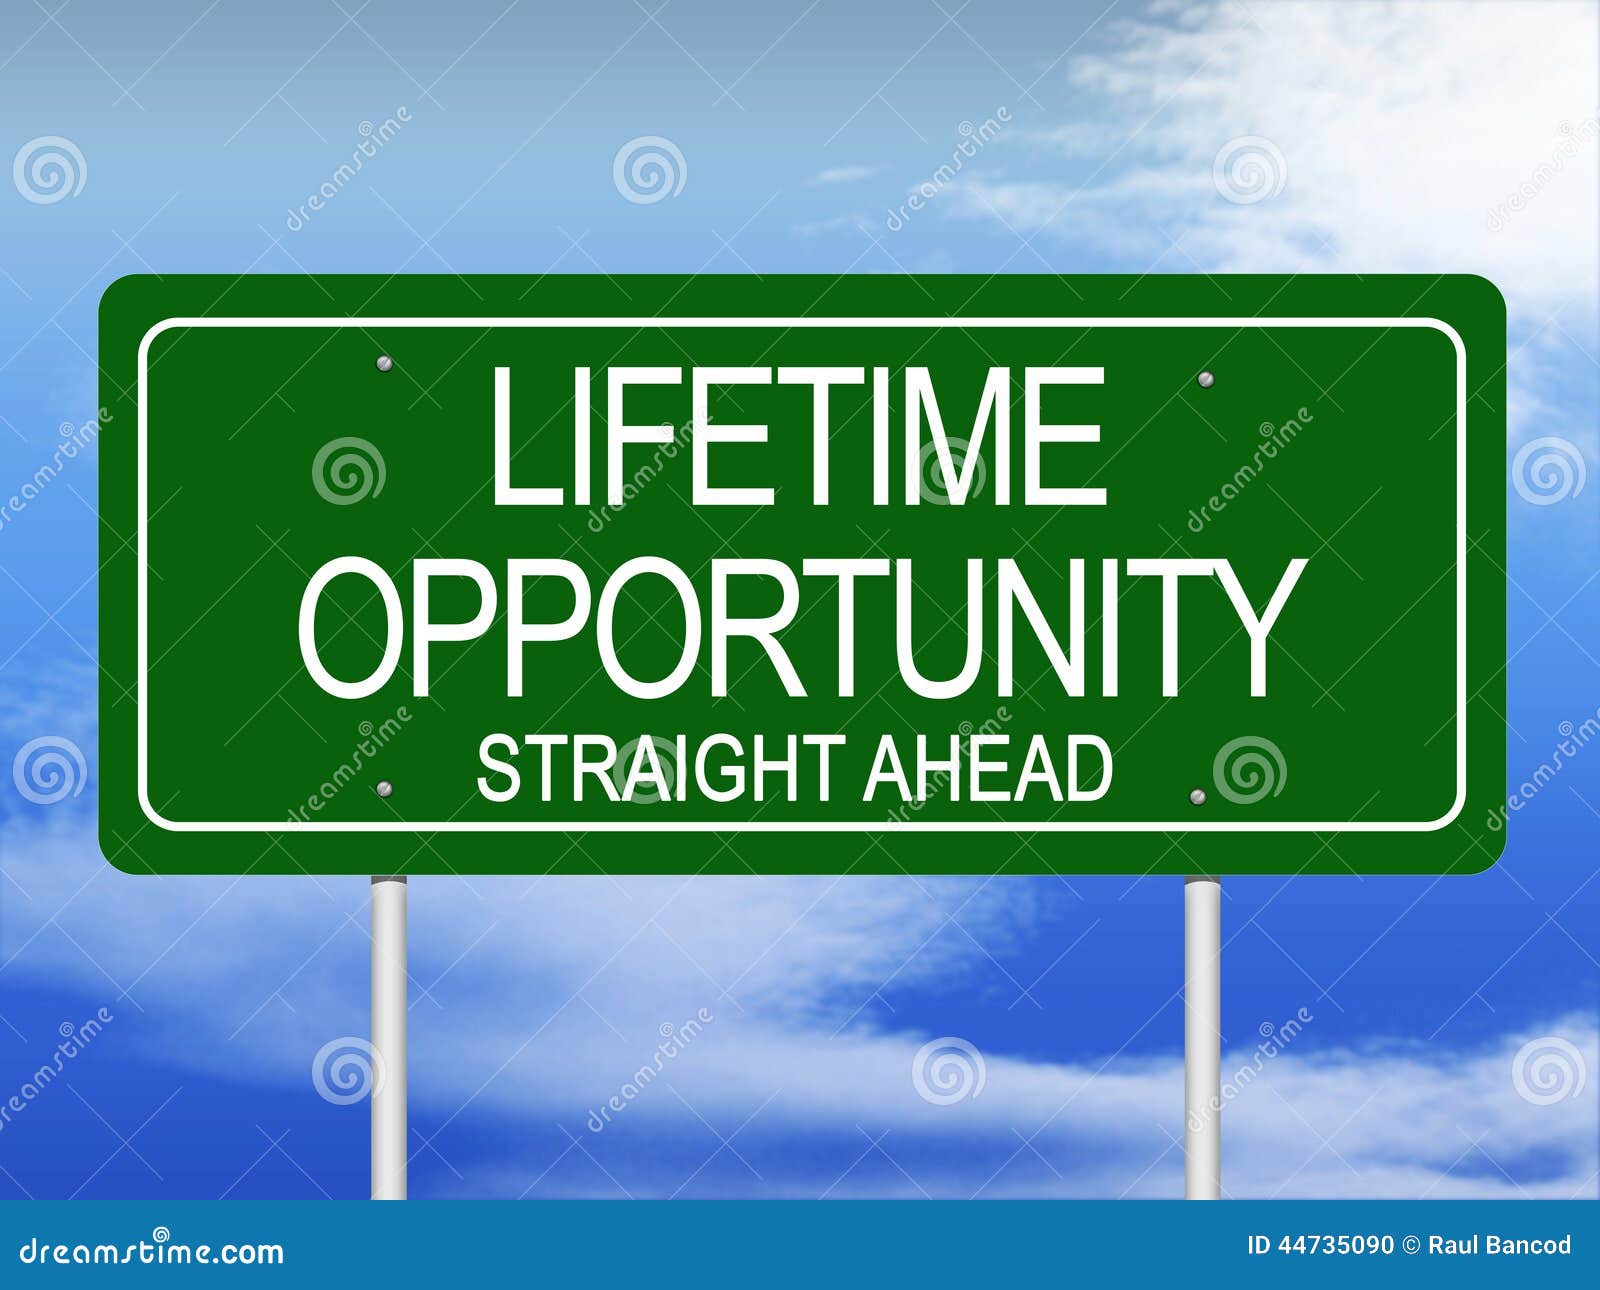 lifetime opportunity